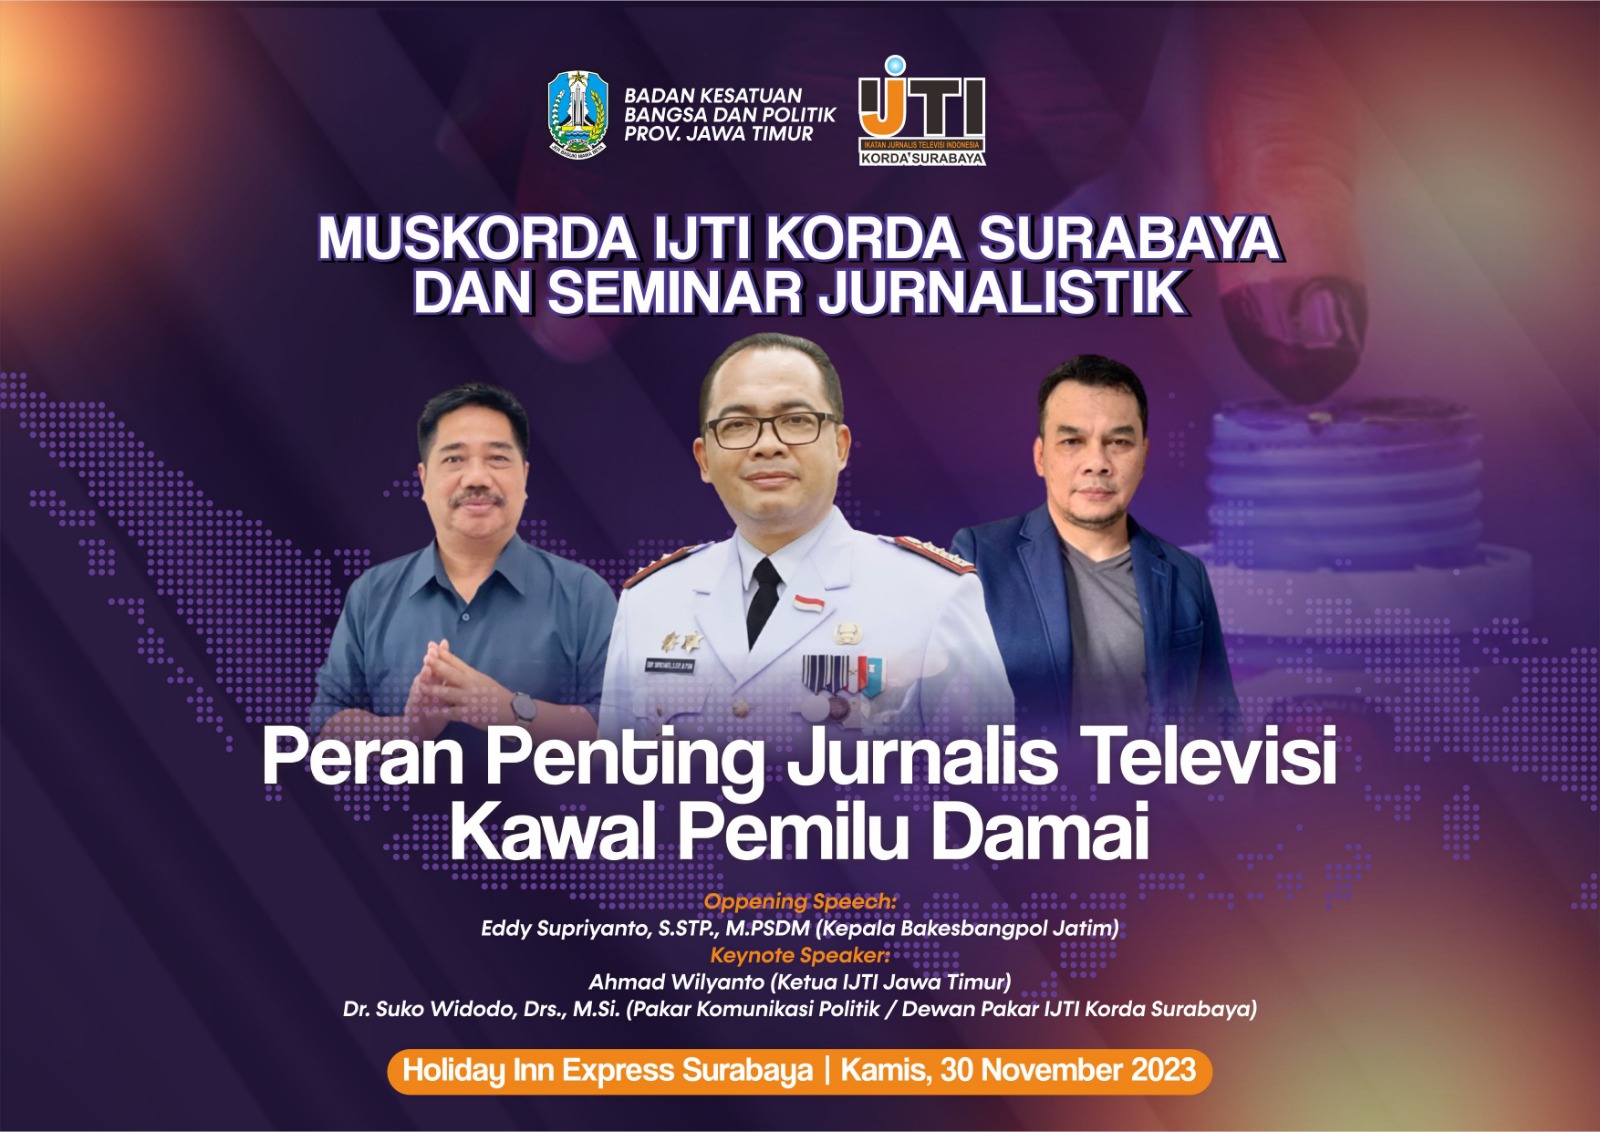 IJTI Korda Surabaya & Bakesbangpol Jatim Gelar Seminar Jurnalistik